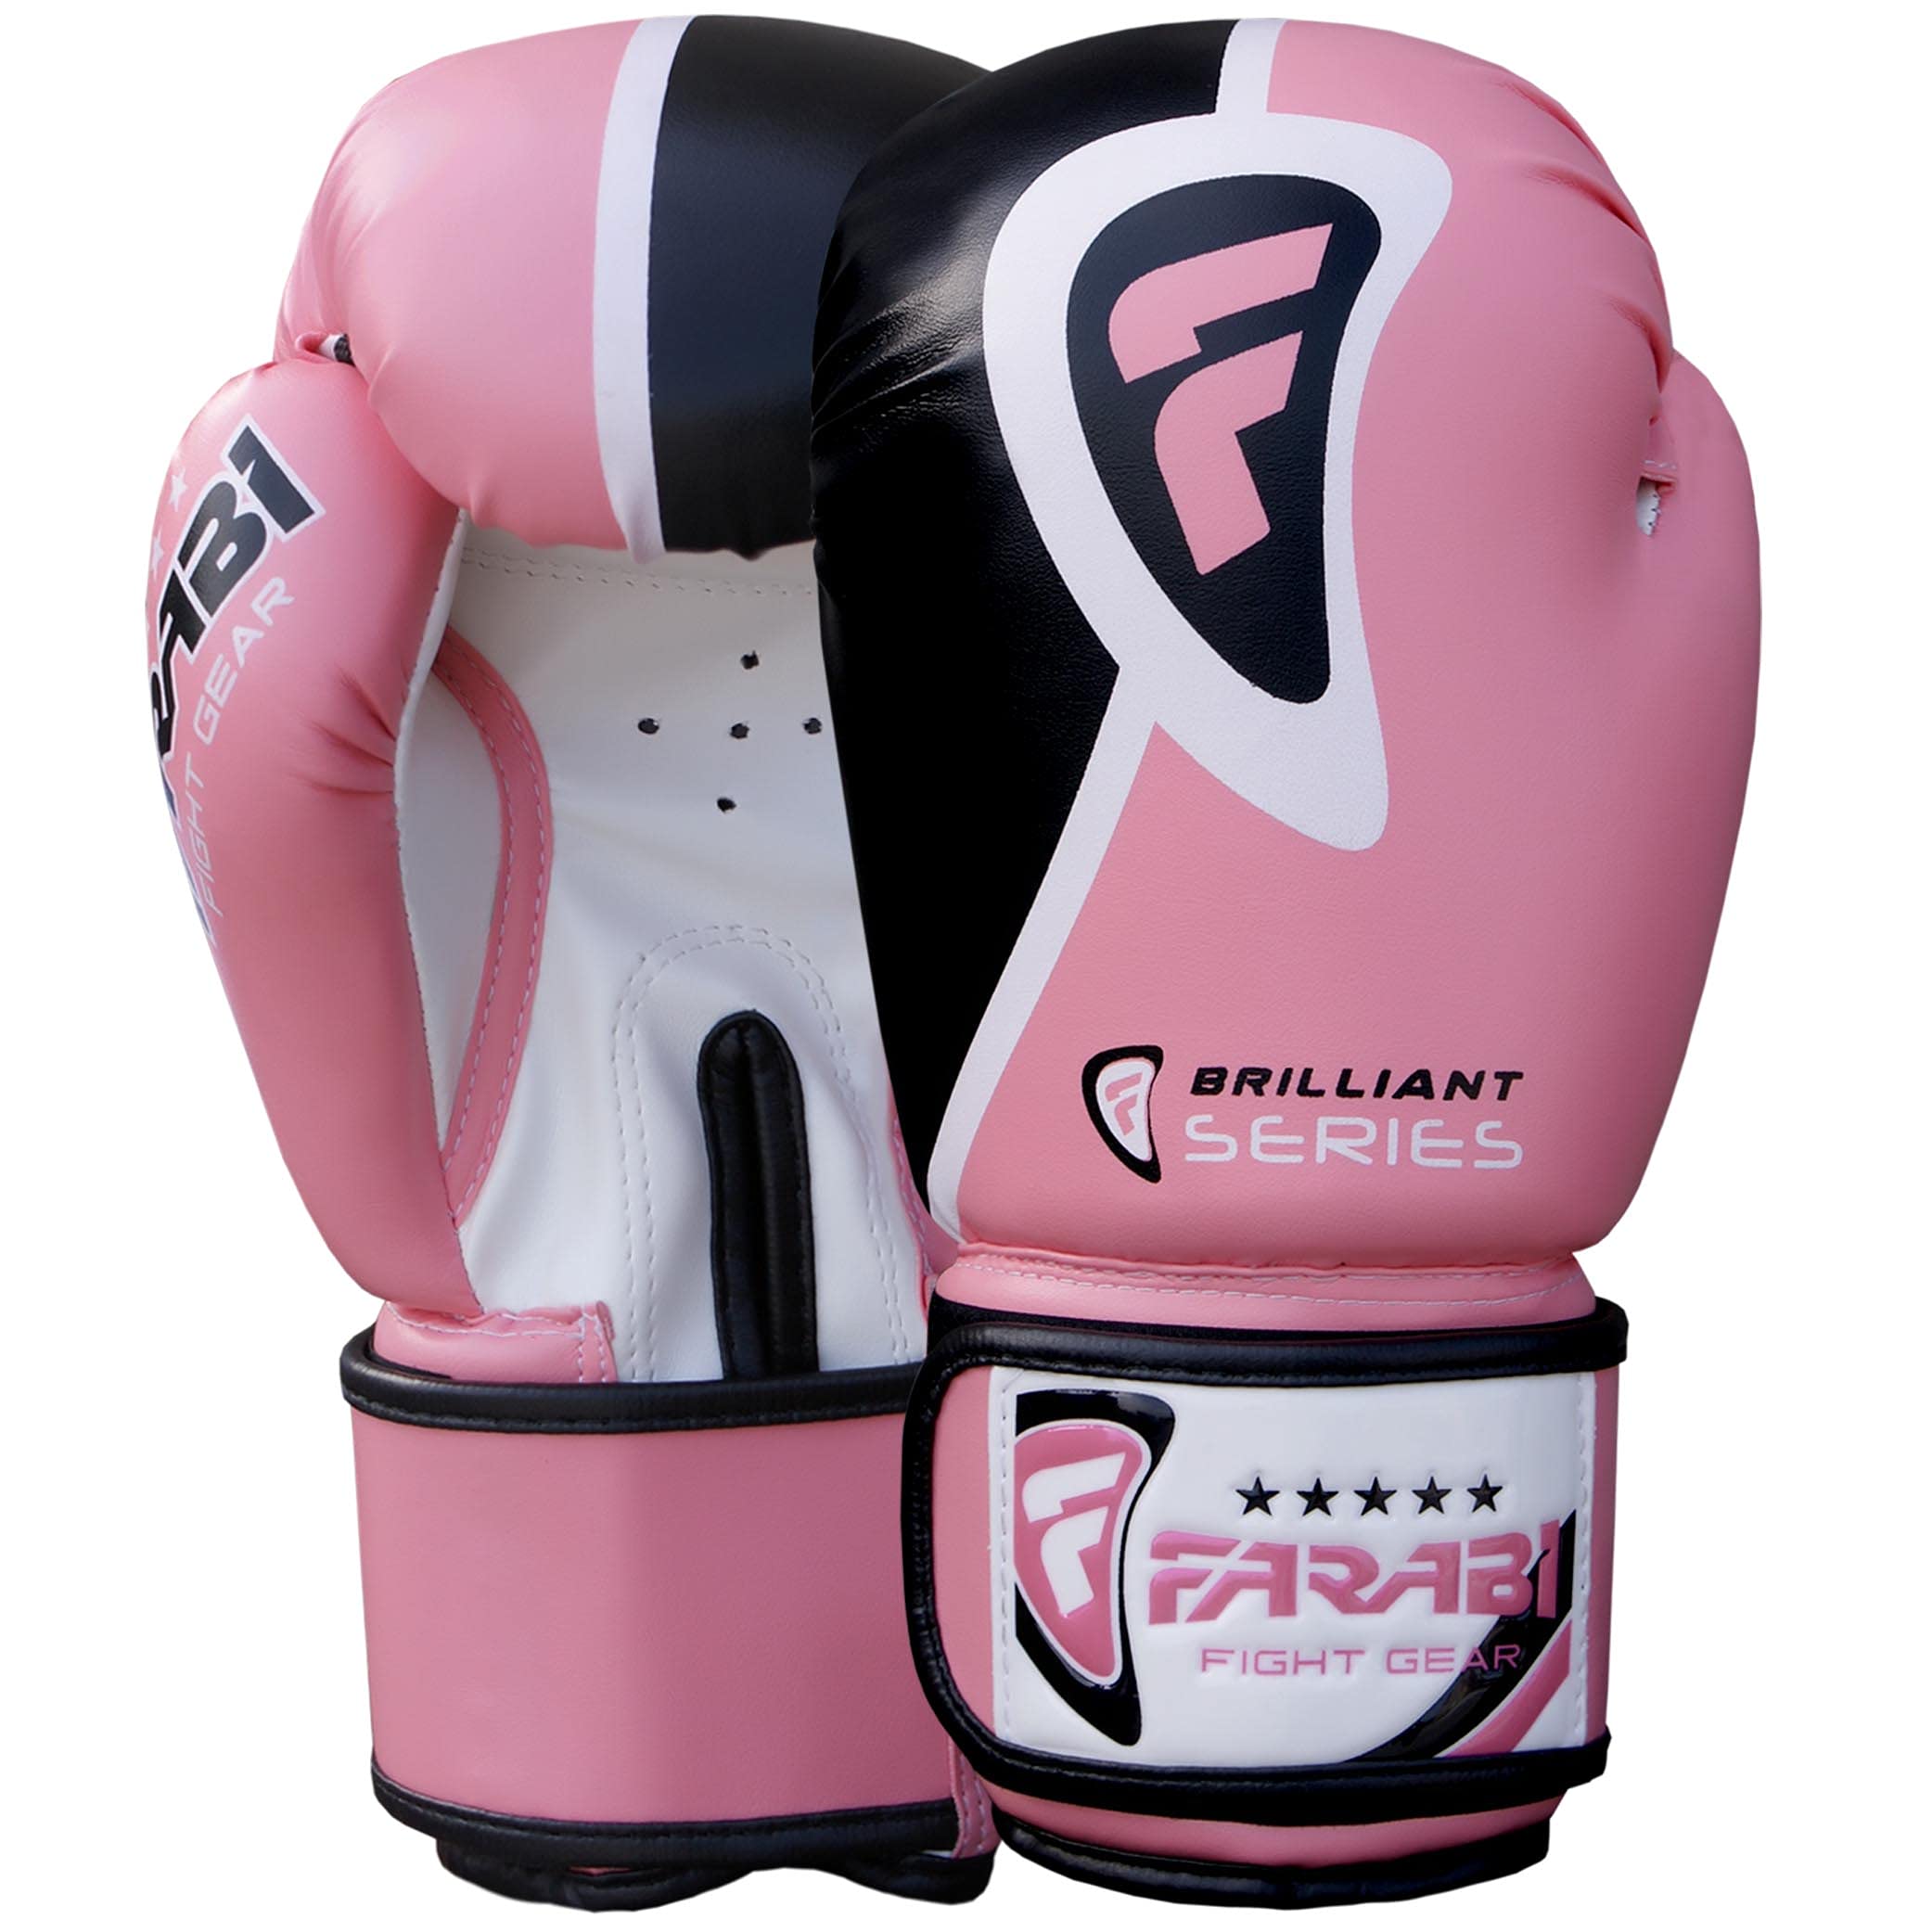 Farabi Sports Boxhandschuhe 10 oz, 12 oz, 14 oz, 16 oz Box Handschuhe für Training, Sparring, Kickboxen, MMA, Muay Thai, Boxhandschuhe männer & Damen Kampf Handschuhe (Pink Brilliant, 12-oz)